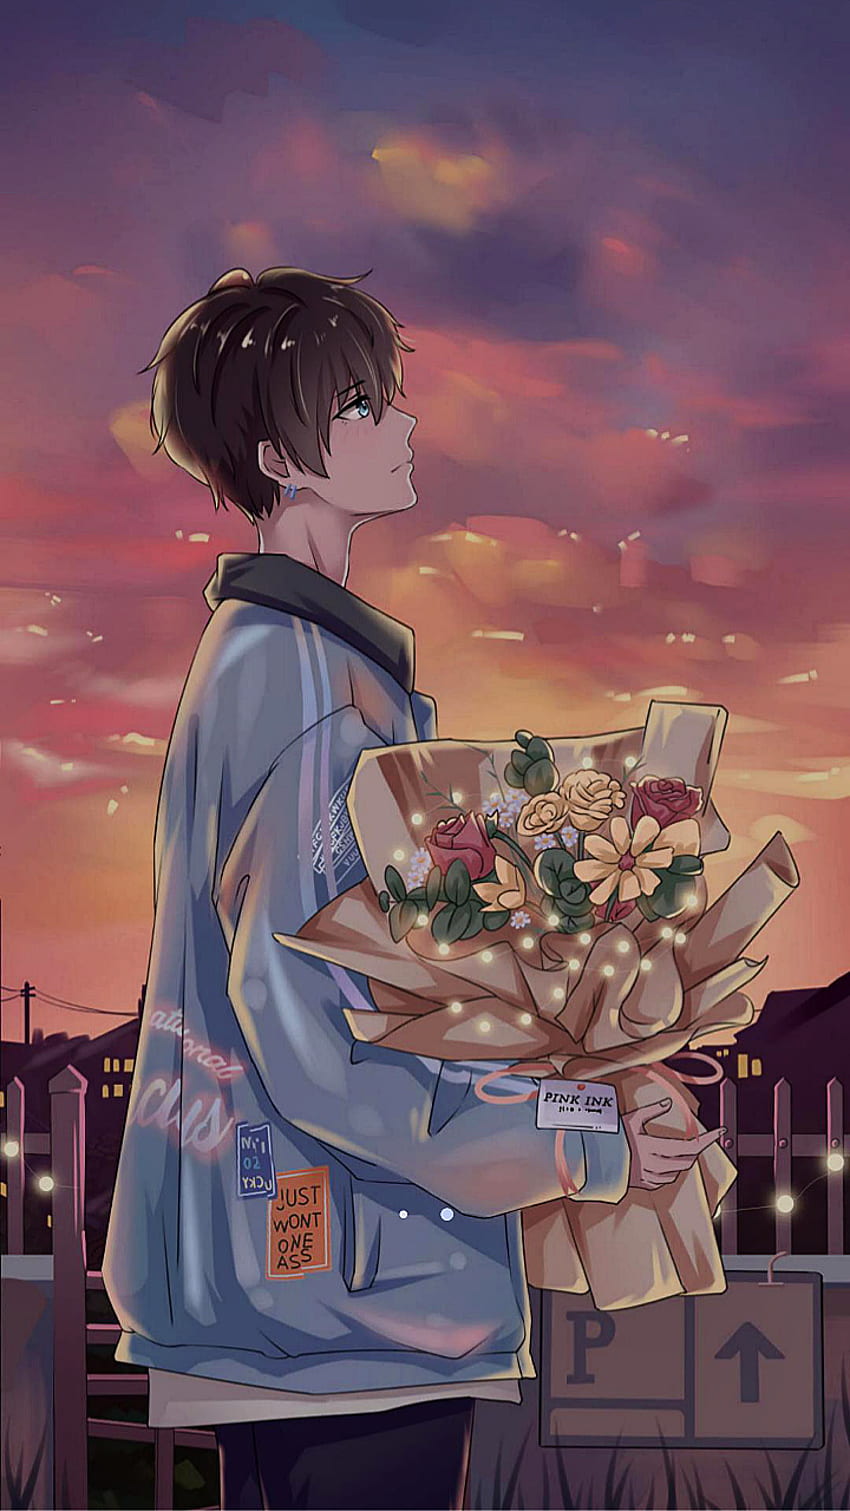 3840x2160px, 4K Free download | Anime boy, proposal, sky, flowers, city ...